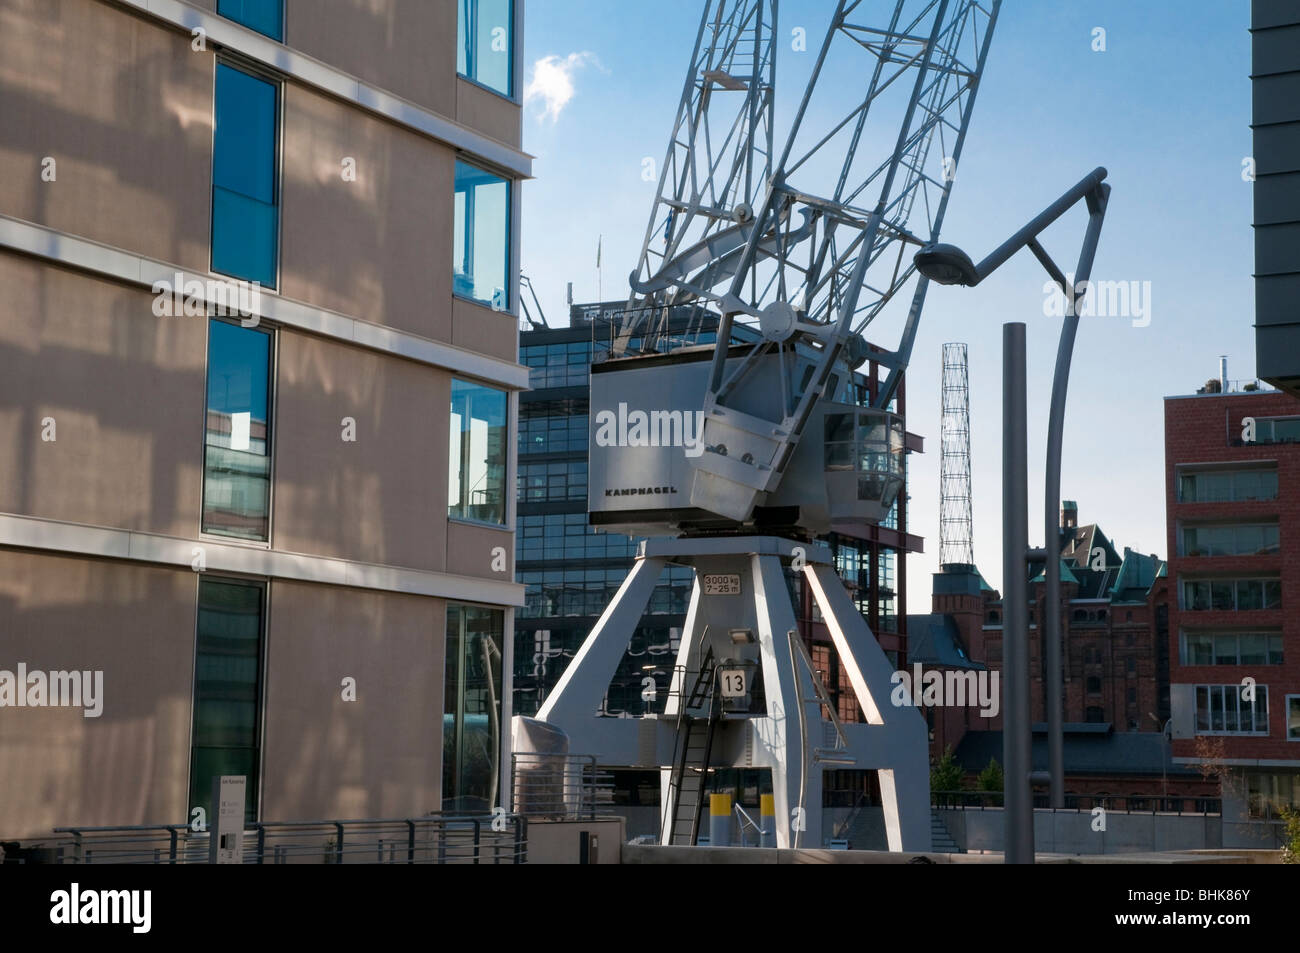 alter Kran, Hafen City, Deutschland | crane, harbour city, Hamburg, Germany Stock Photo Alamy